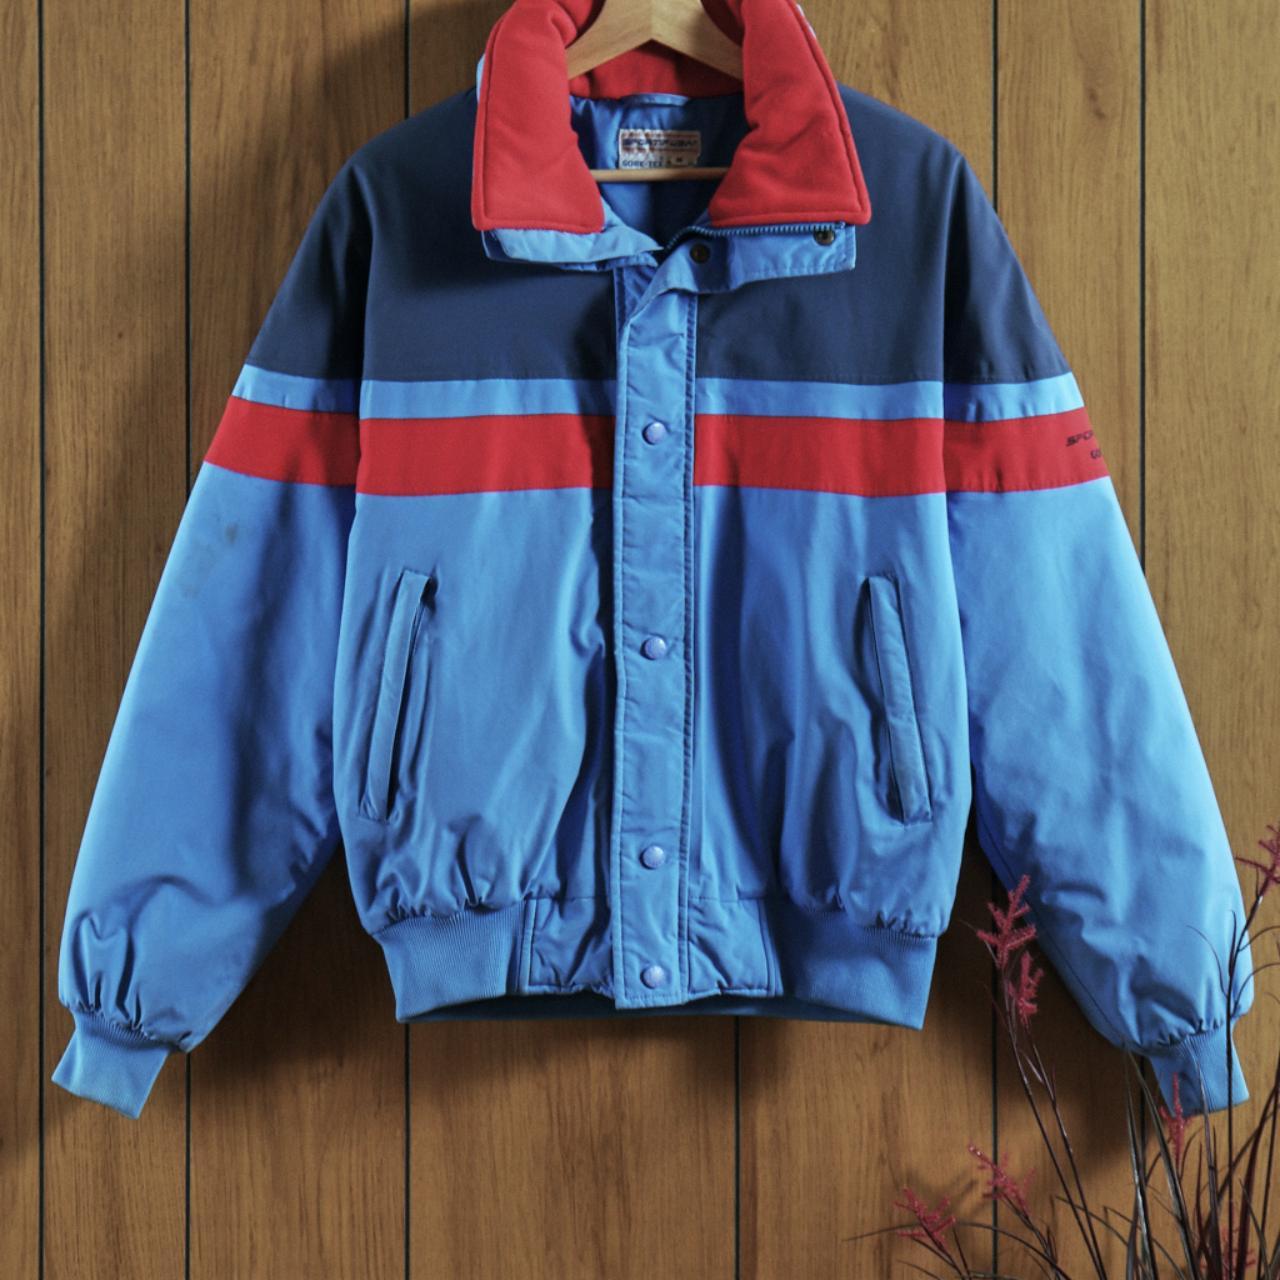 80's Vintage Jacket: 80s -Windbreaker- Mens red background